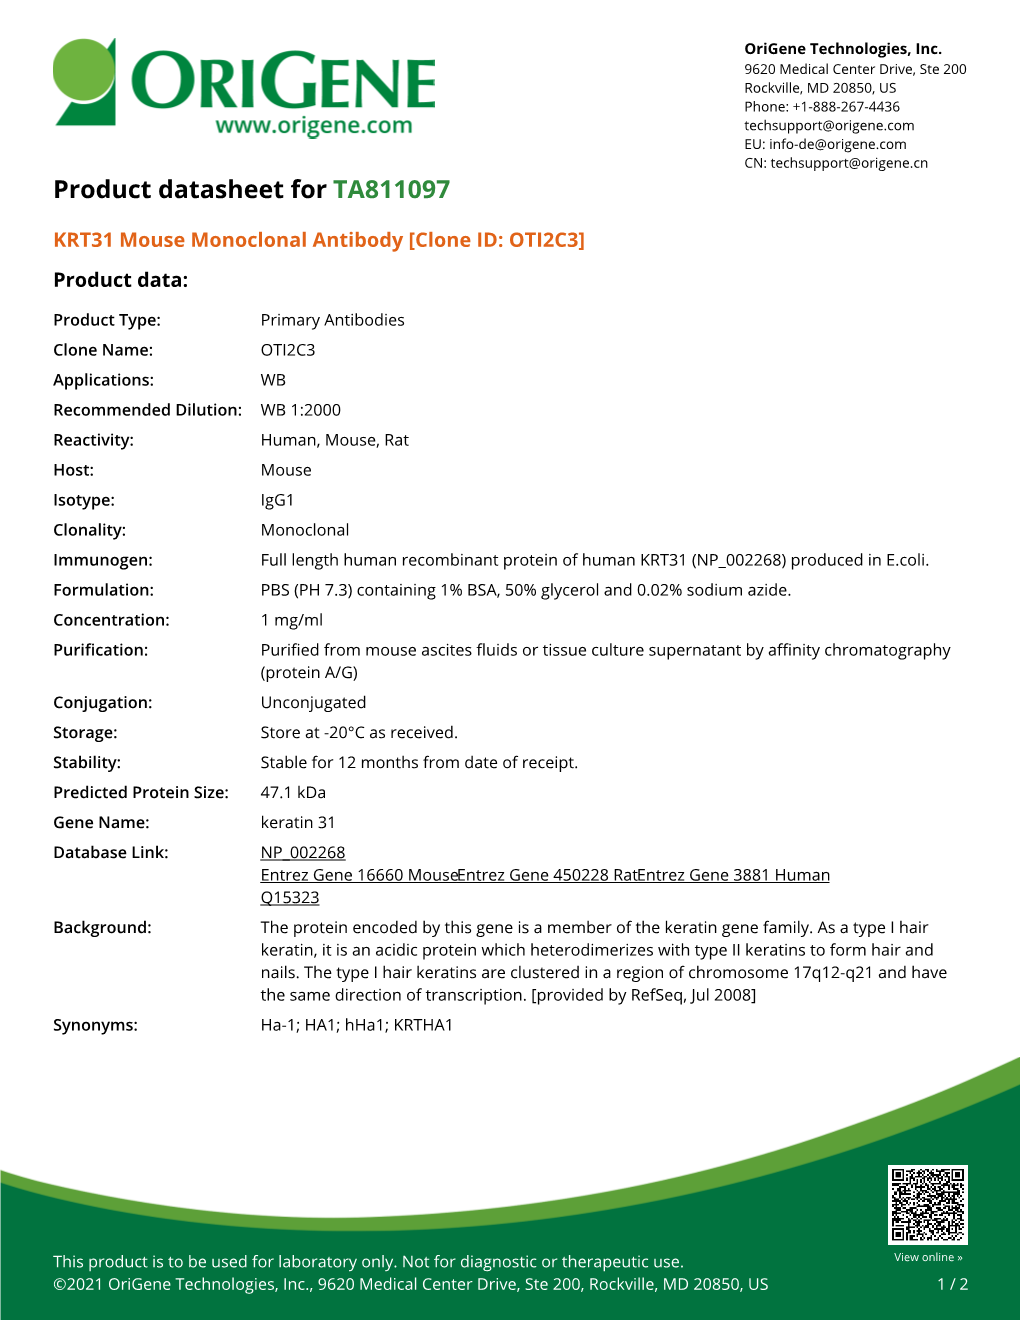 KRT31 Mouse Monoclonal Antibody [Clone ID: OTI2C3] Product Data